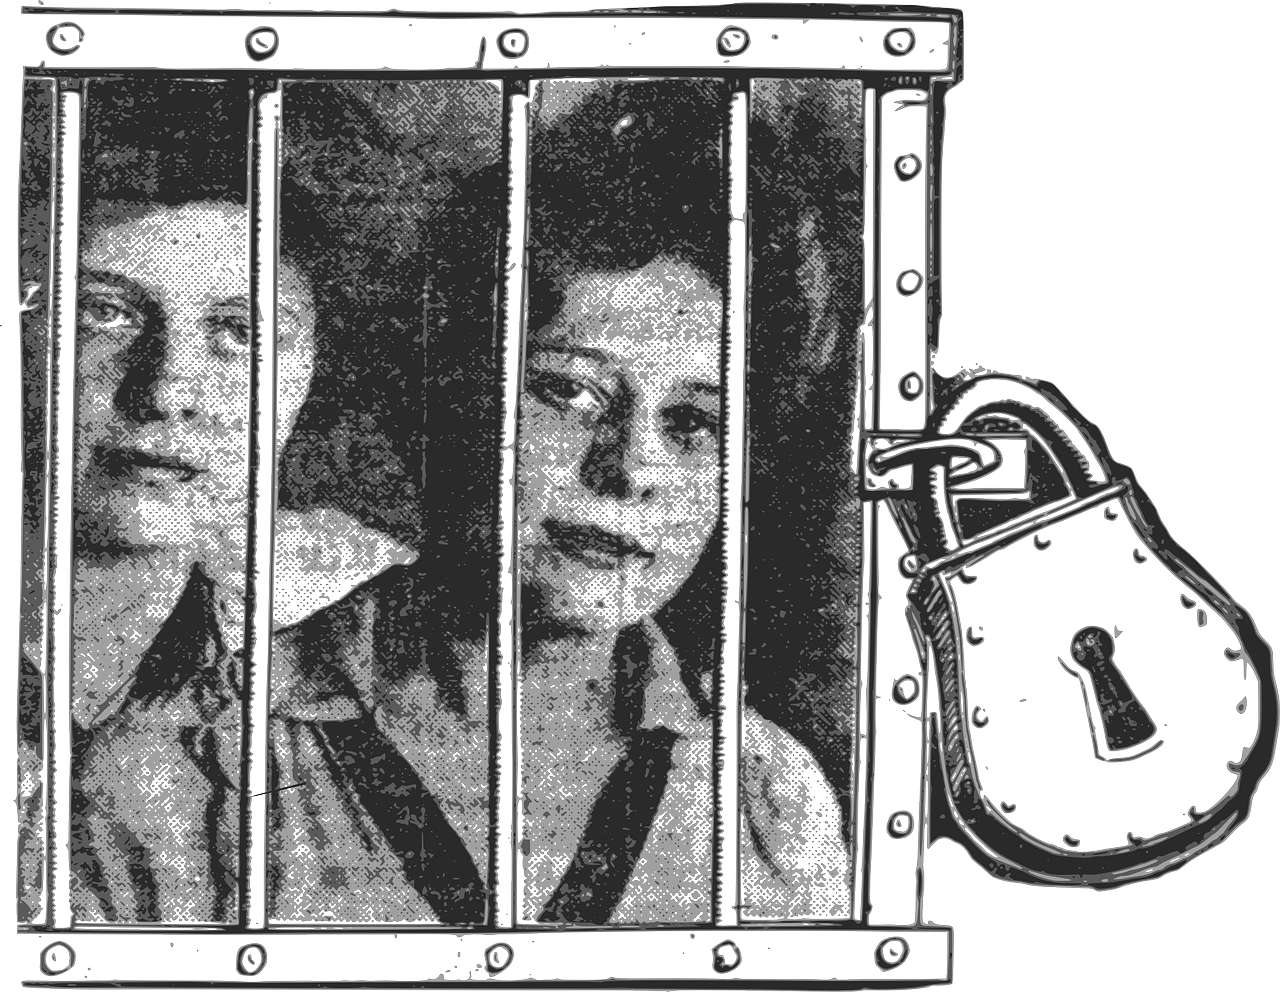 Suffragettes behind bars